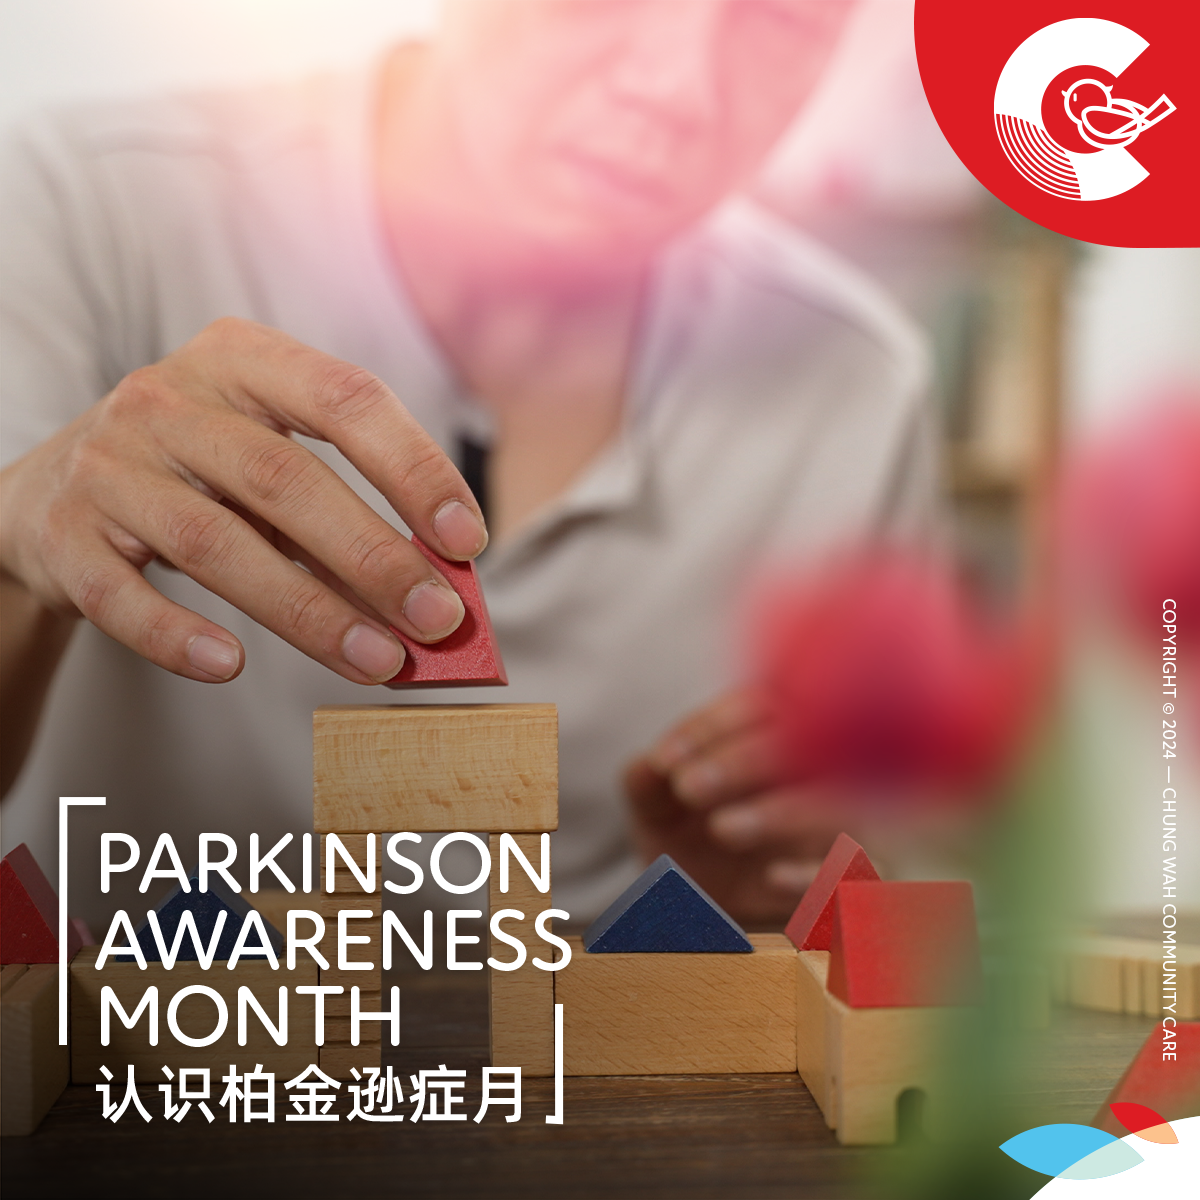 Parkinson's Disease Awareness Month